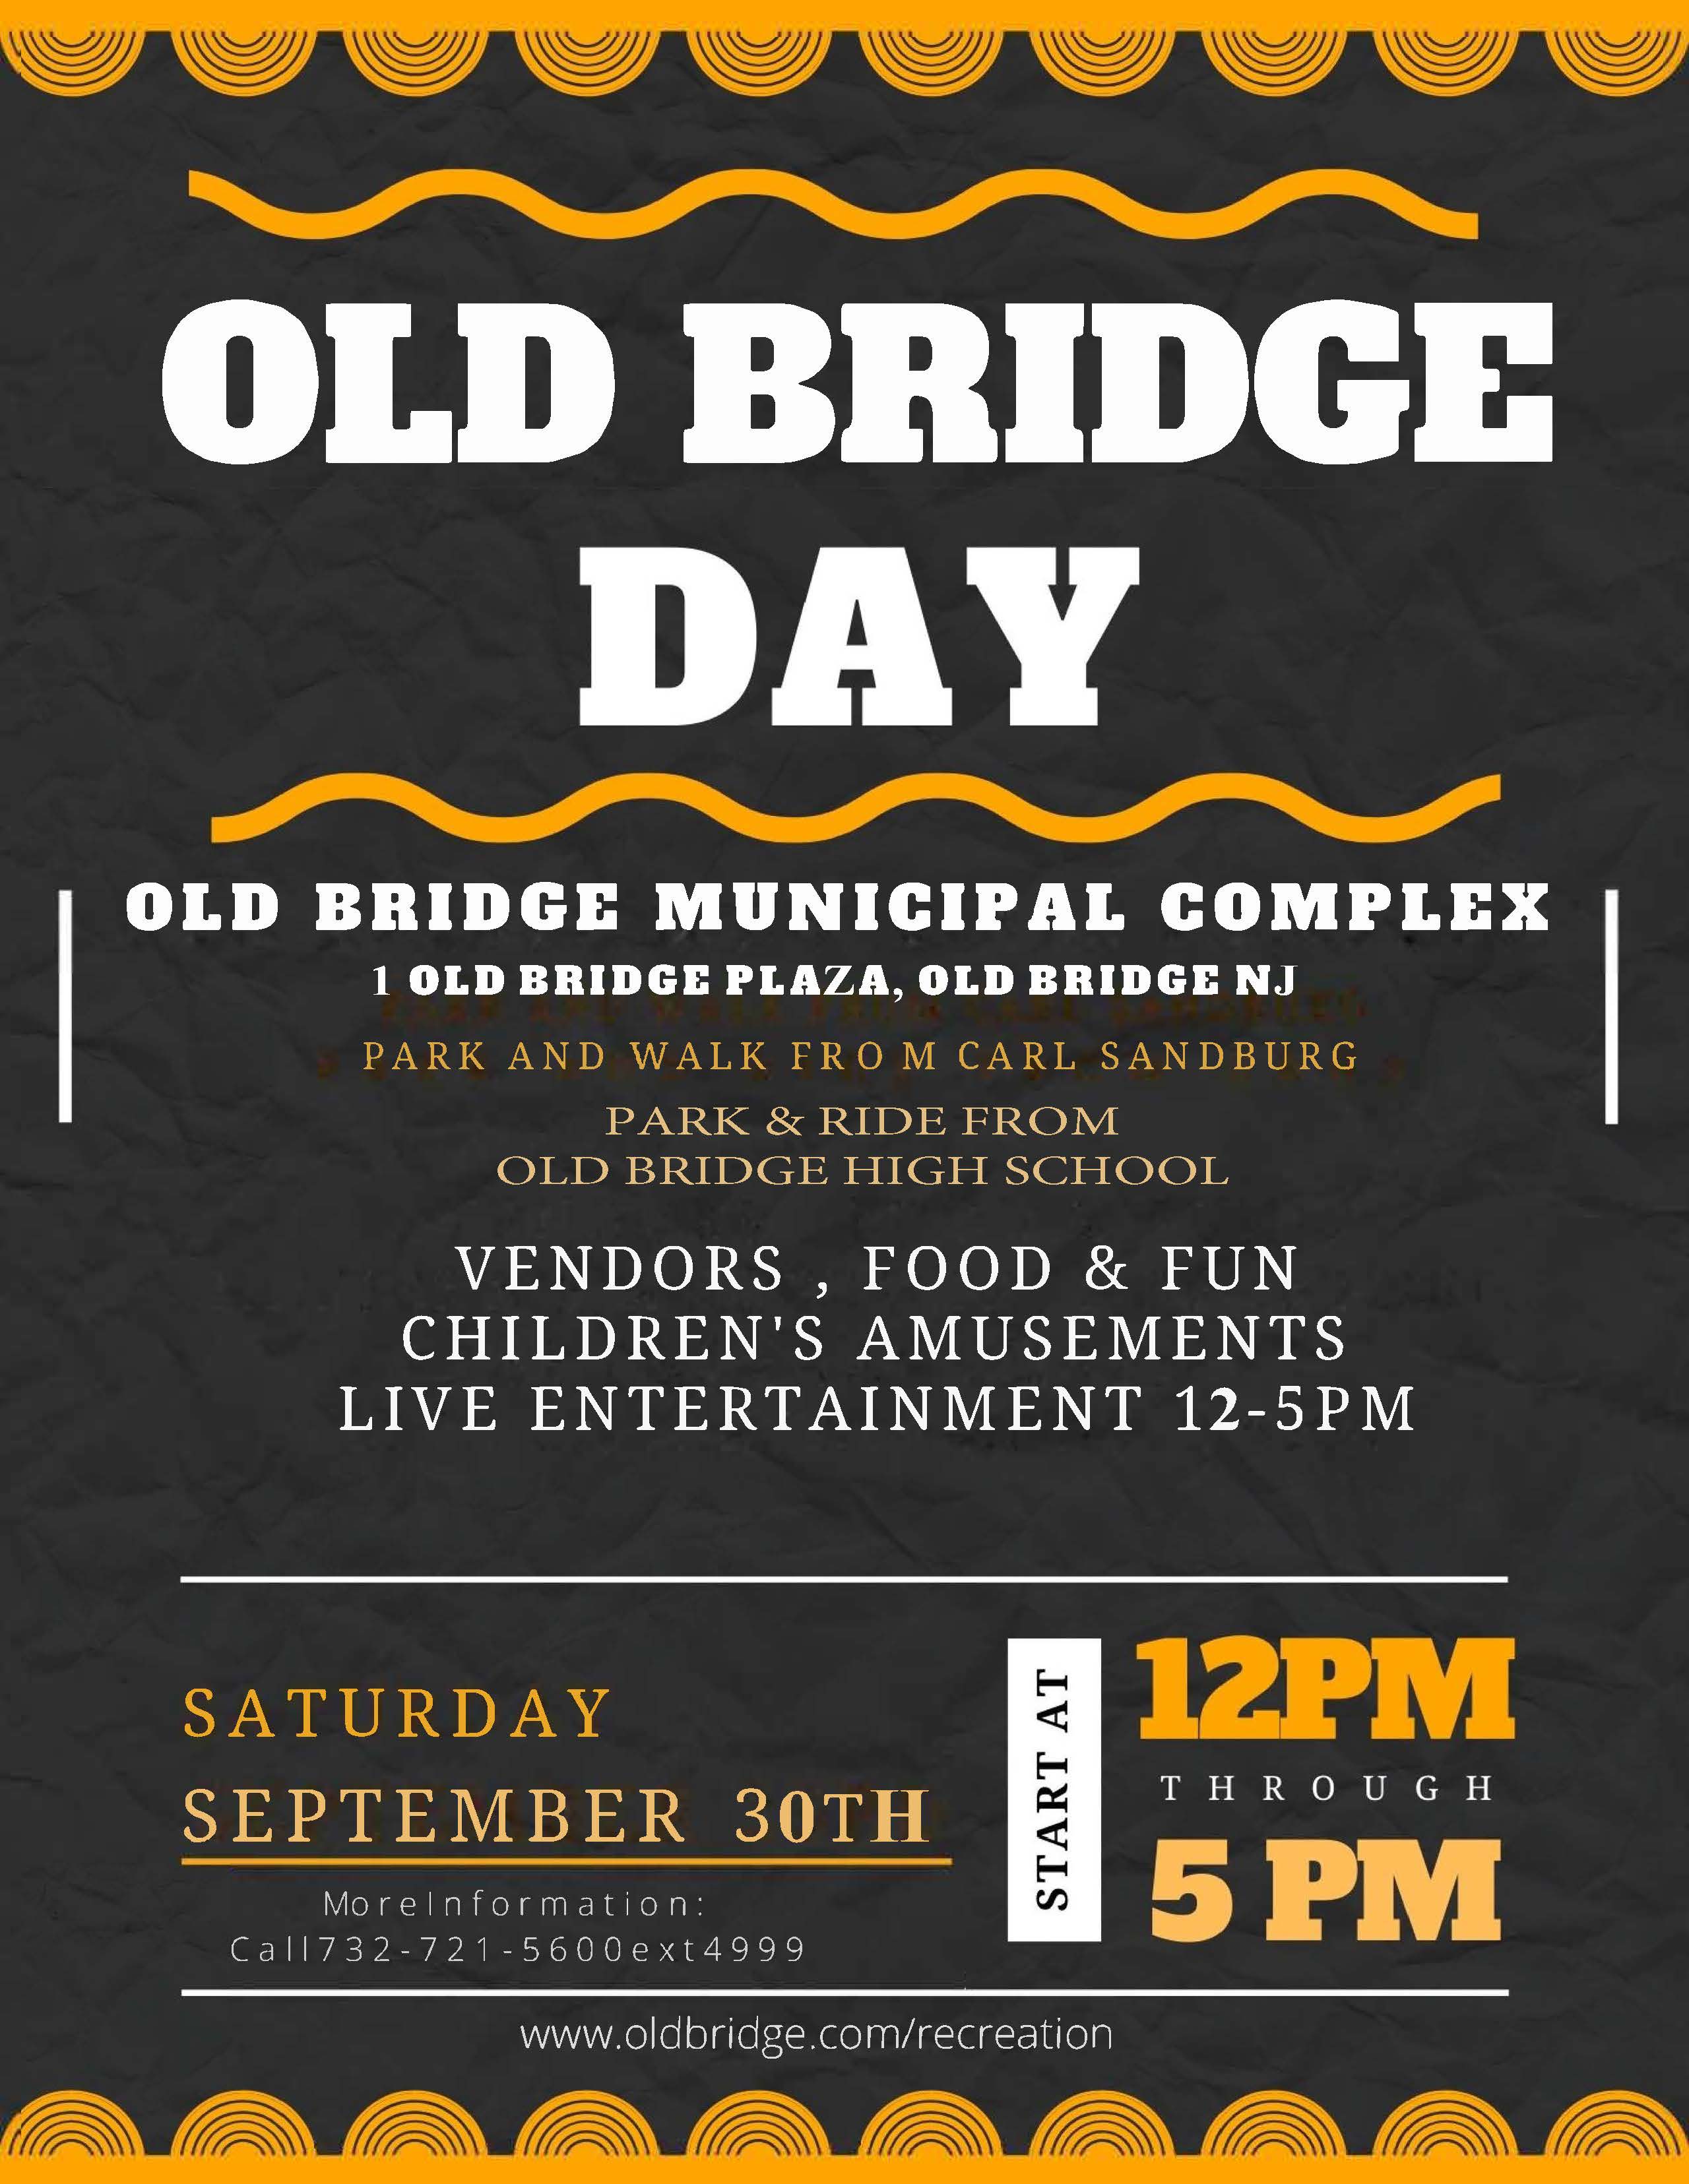 Old Bridge Day September 30th 12-5pm